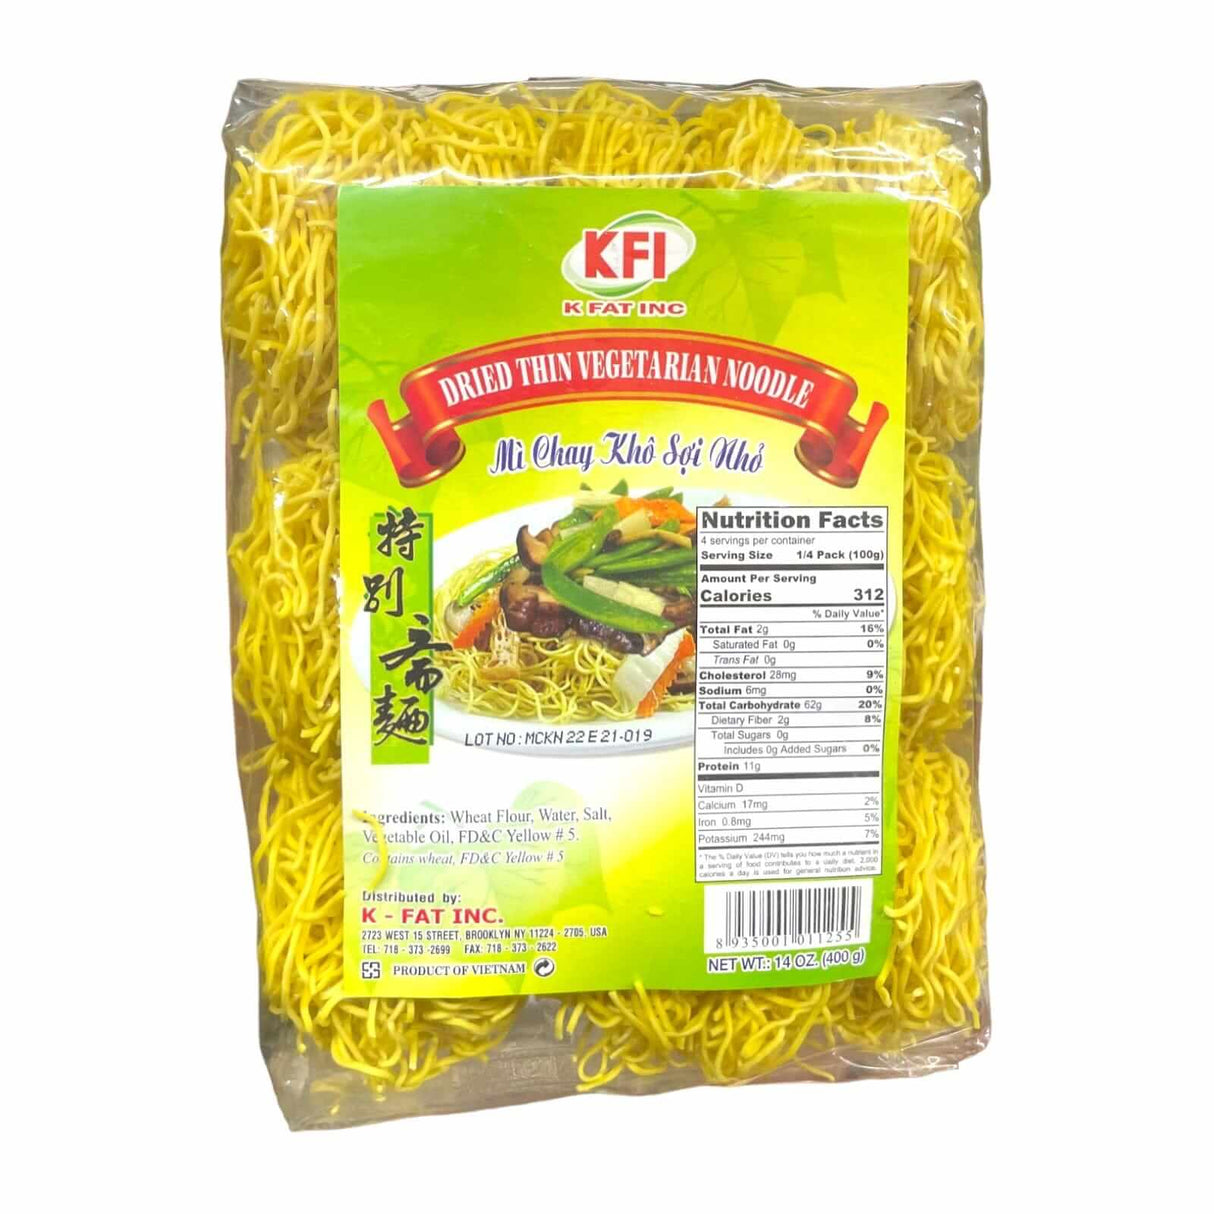 KFI Dried Thin Vegetarian Noodle